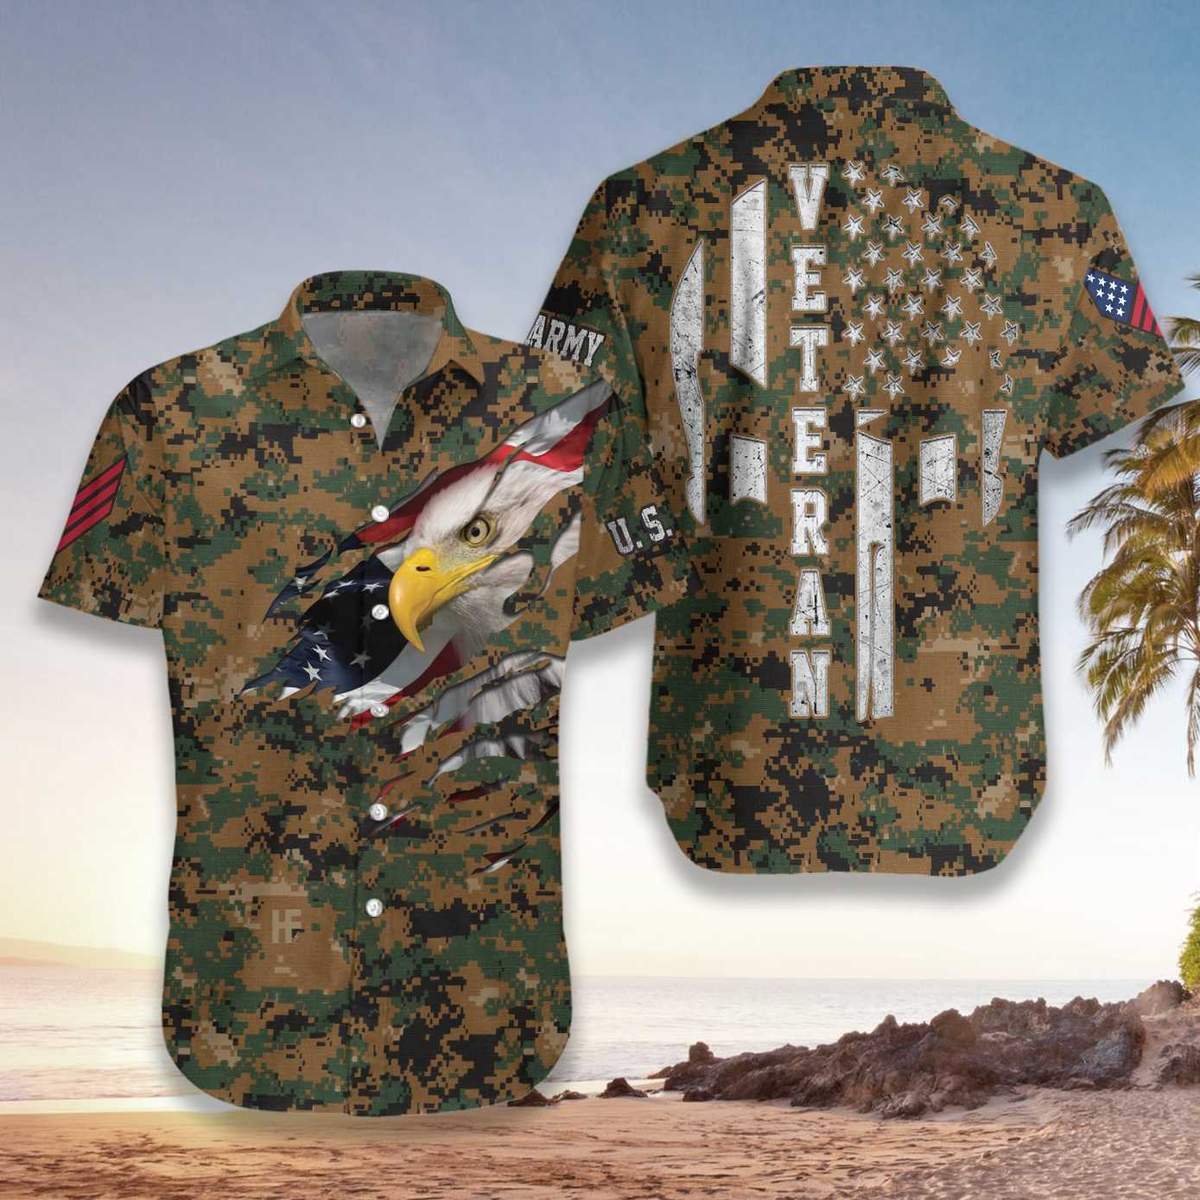 kurobase-amazing-camo-us-army-veteran-eagle-hawaiian-shirts.jpg